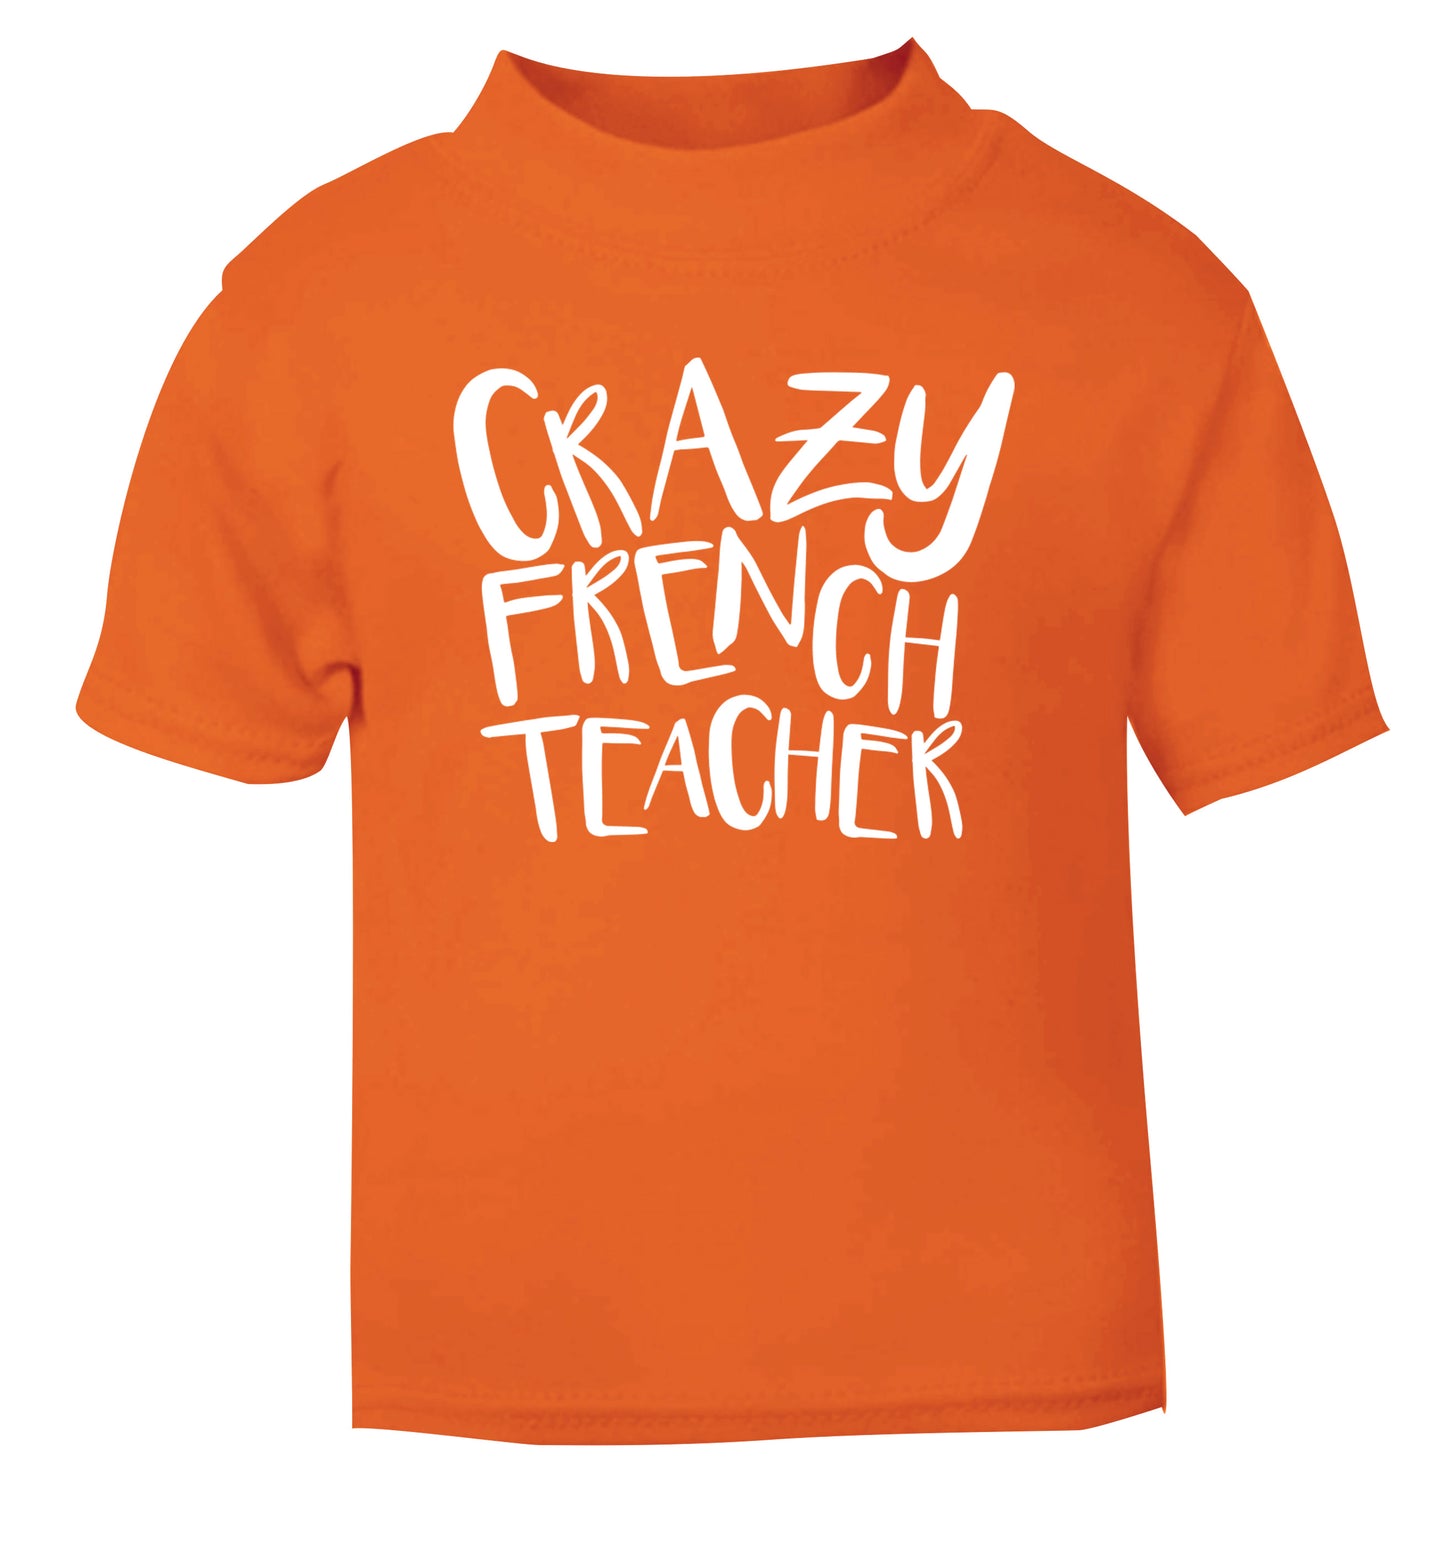 Crazy french teacher orange Baby Toddler Tshirt 2 Years